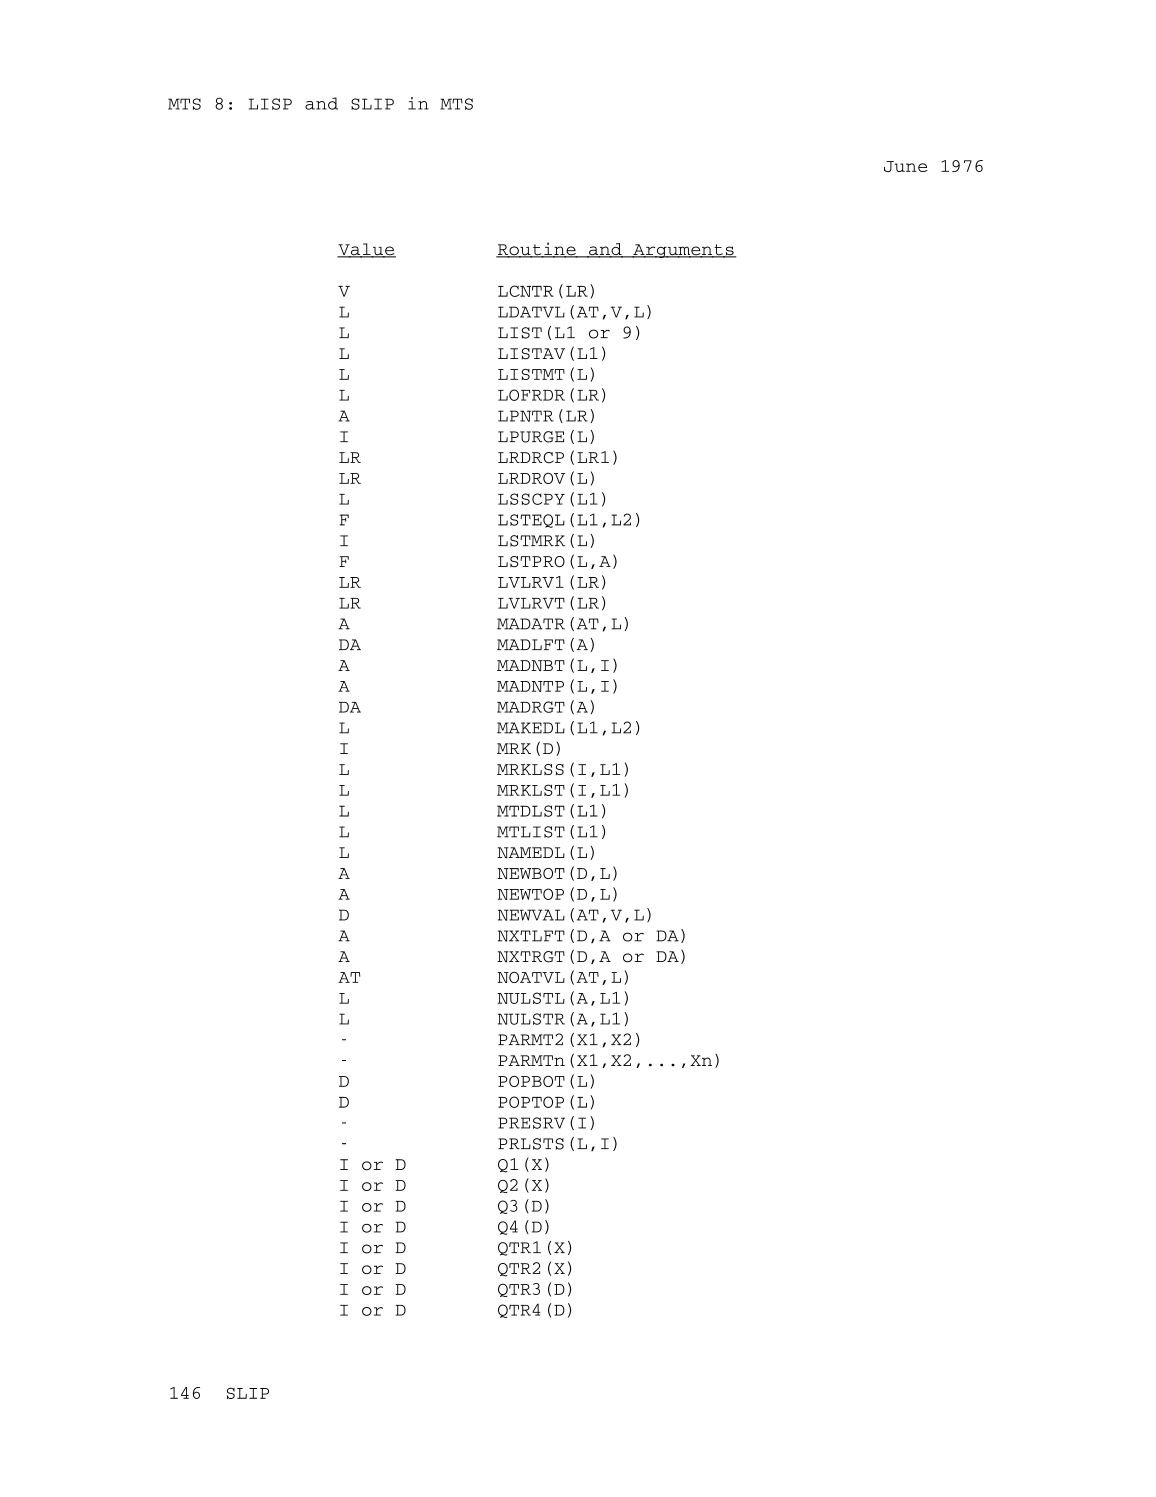 MTS Volume 8 - LISP and SLIP page 146